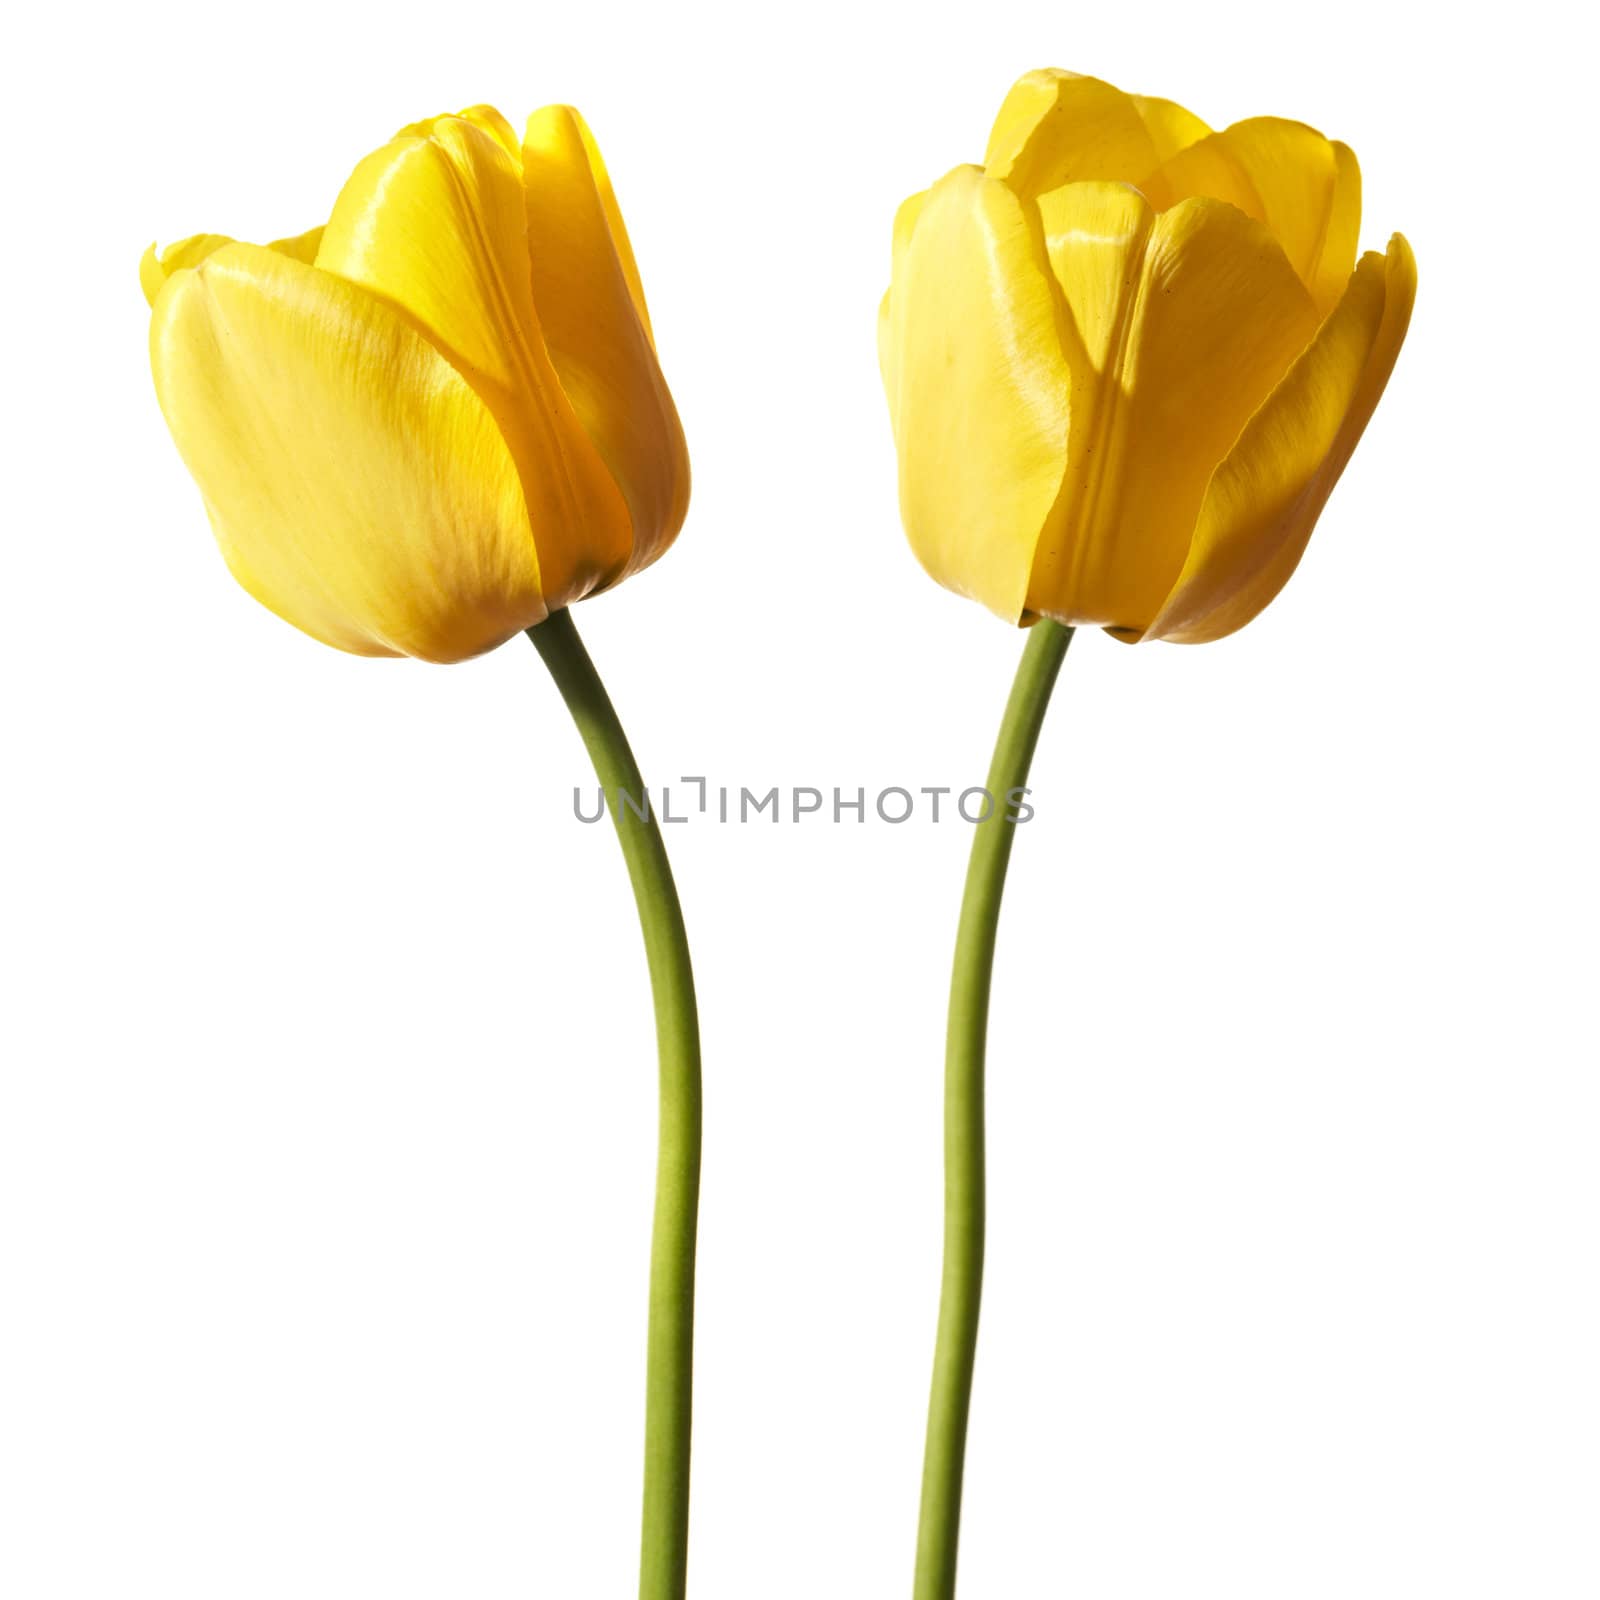 Tulips by filipw